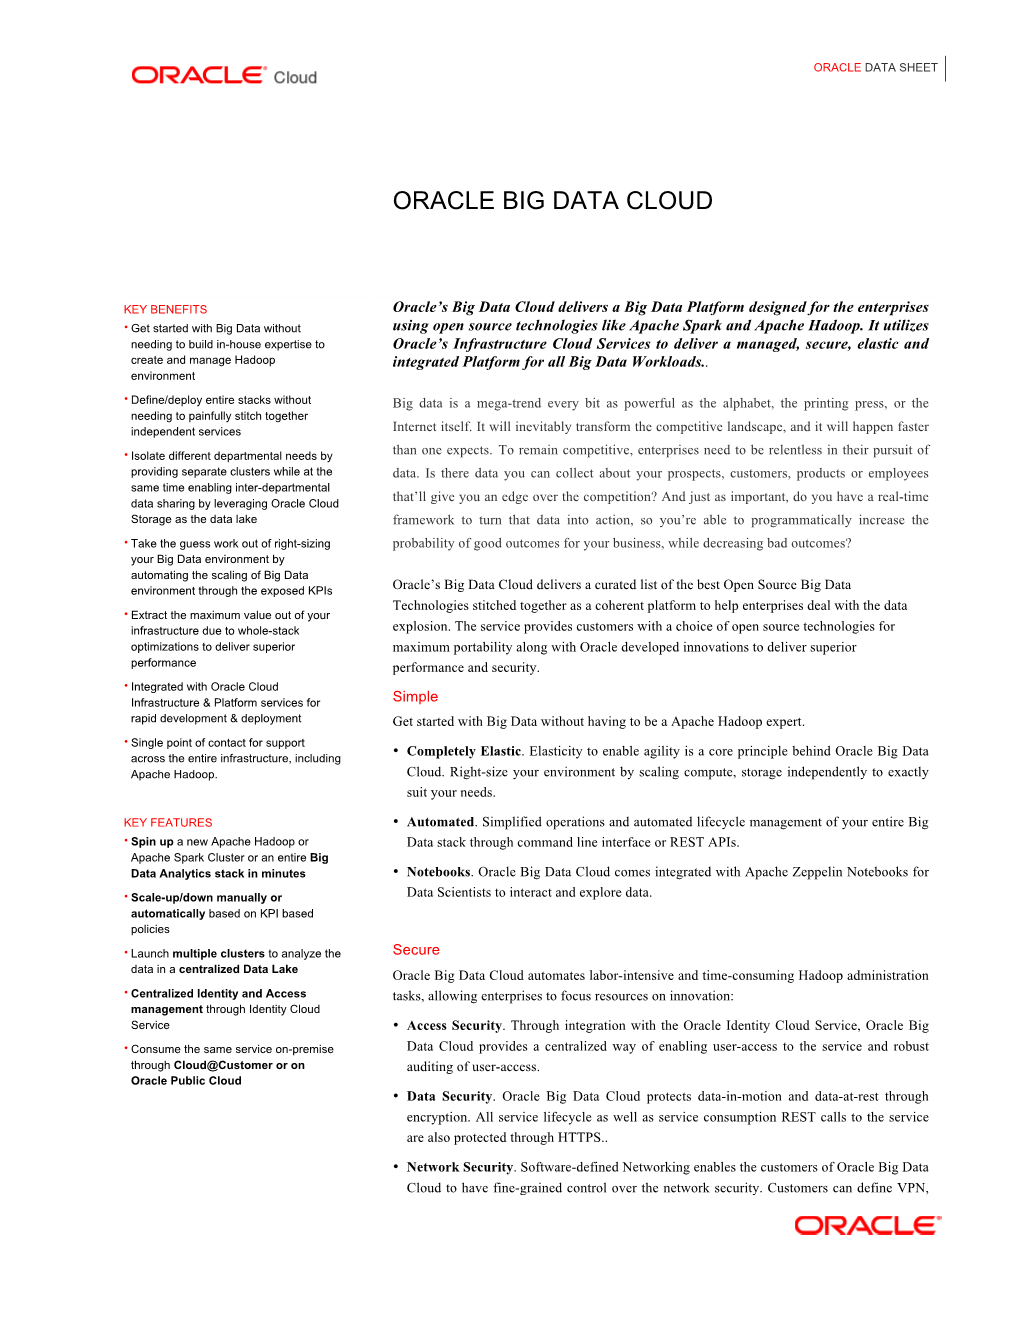 Oracle Big Data Cloud